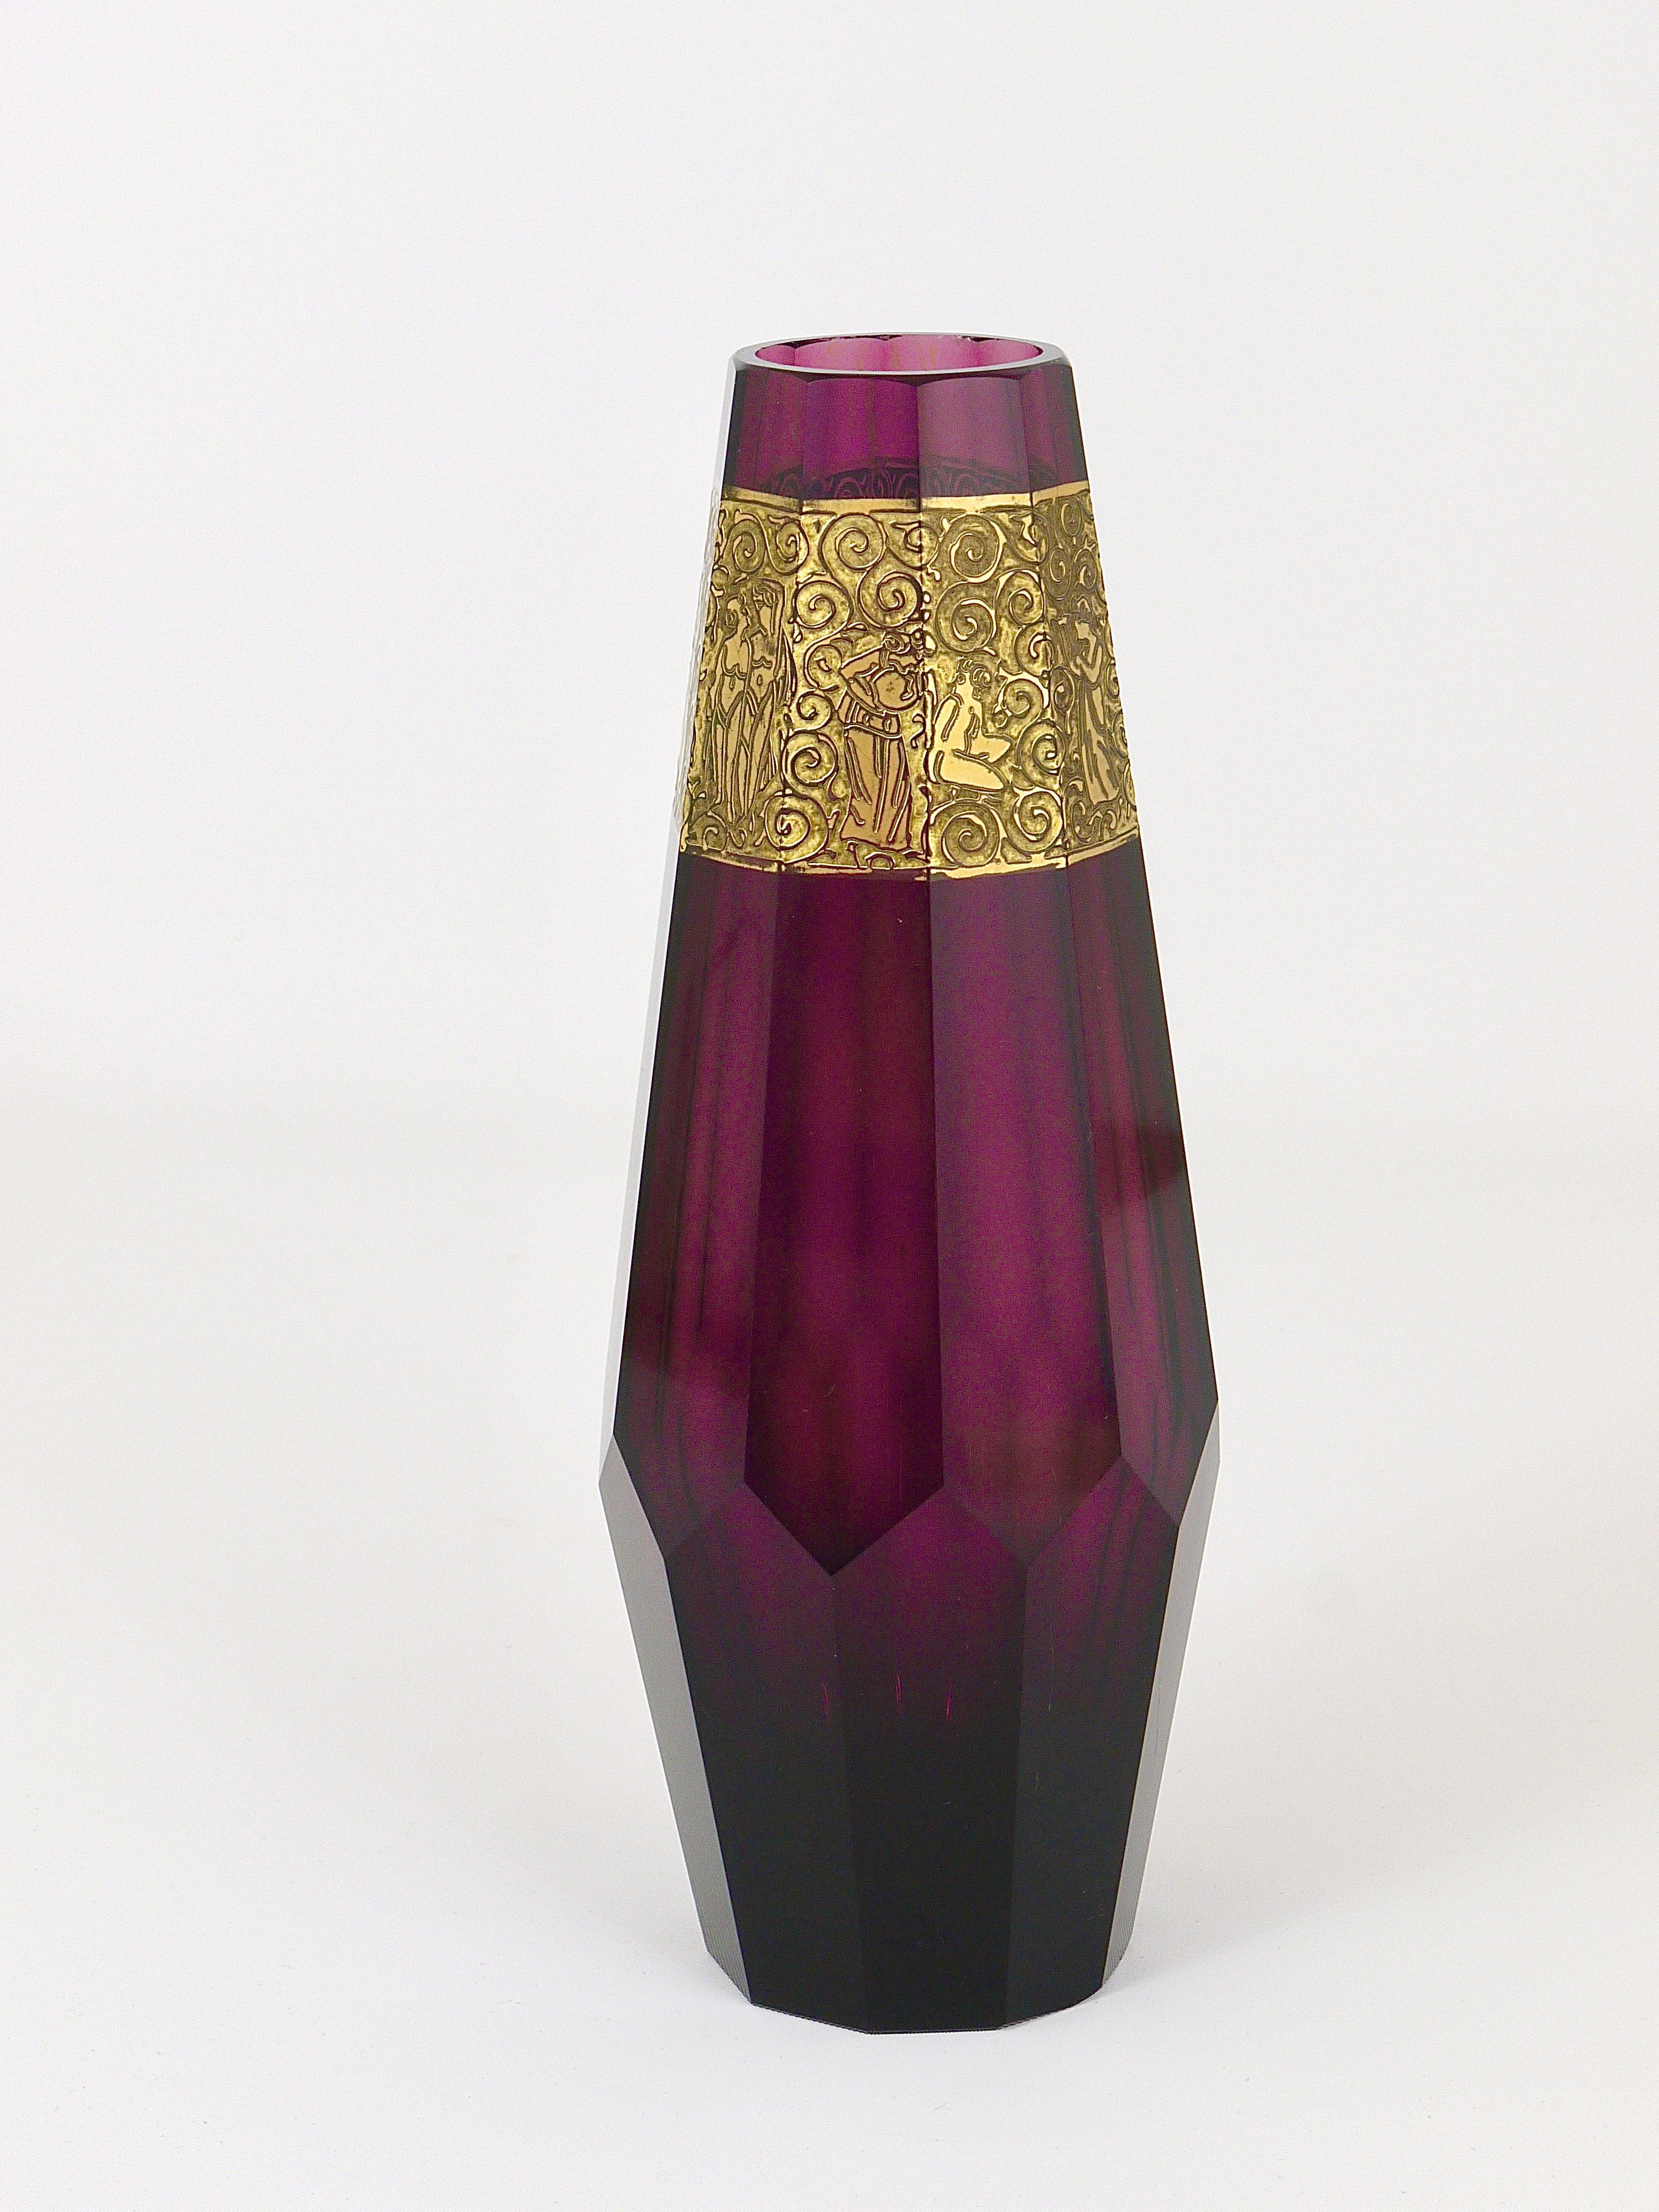 Ludwig Moser Art Deco Amethyst Crystal Glass Vase, Karlsbad/Czechoslovakia, 1920 For Sale 6